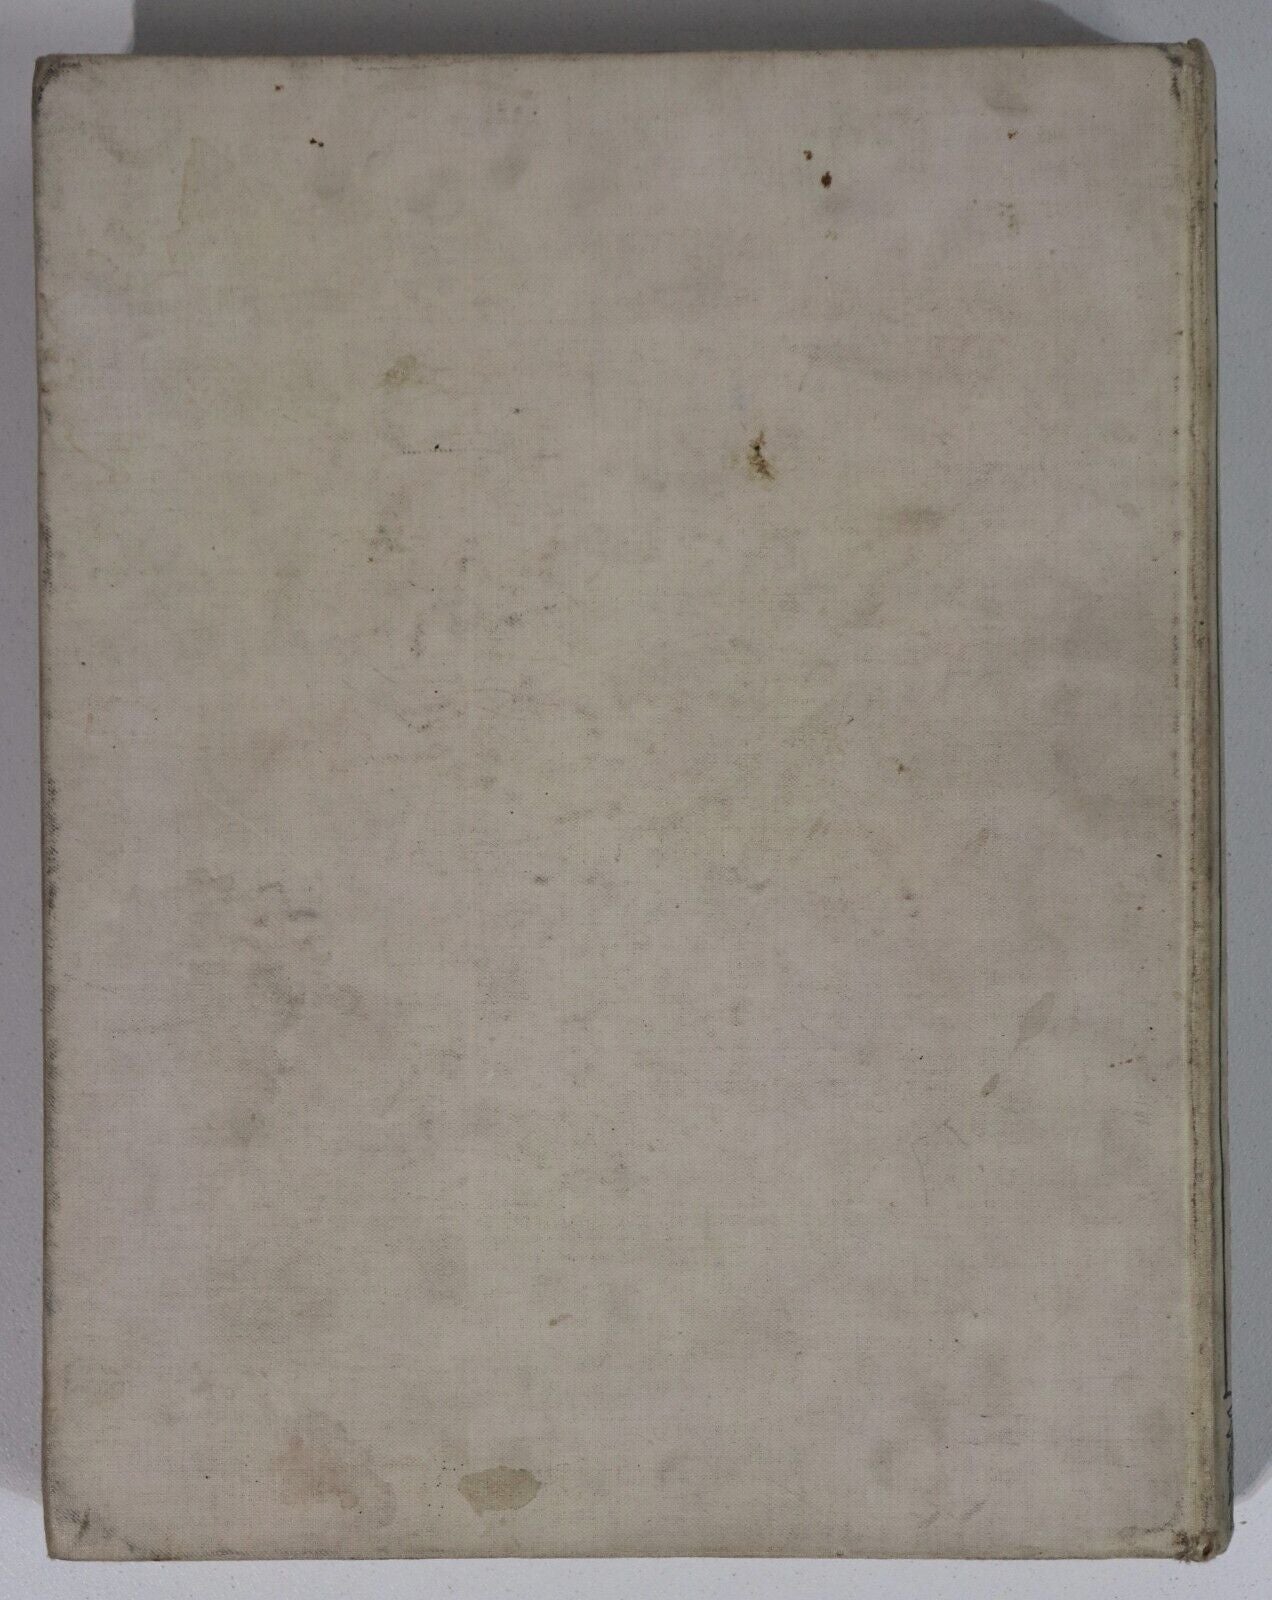 King Albert's Book - Tribute To Belgi - 1915 - Antique Art Book